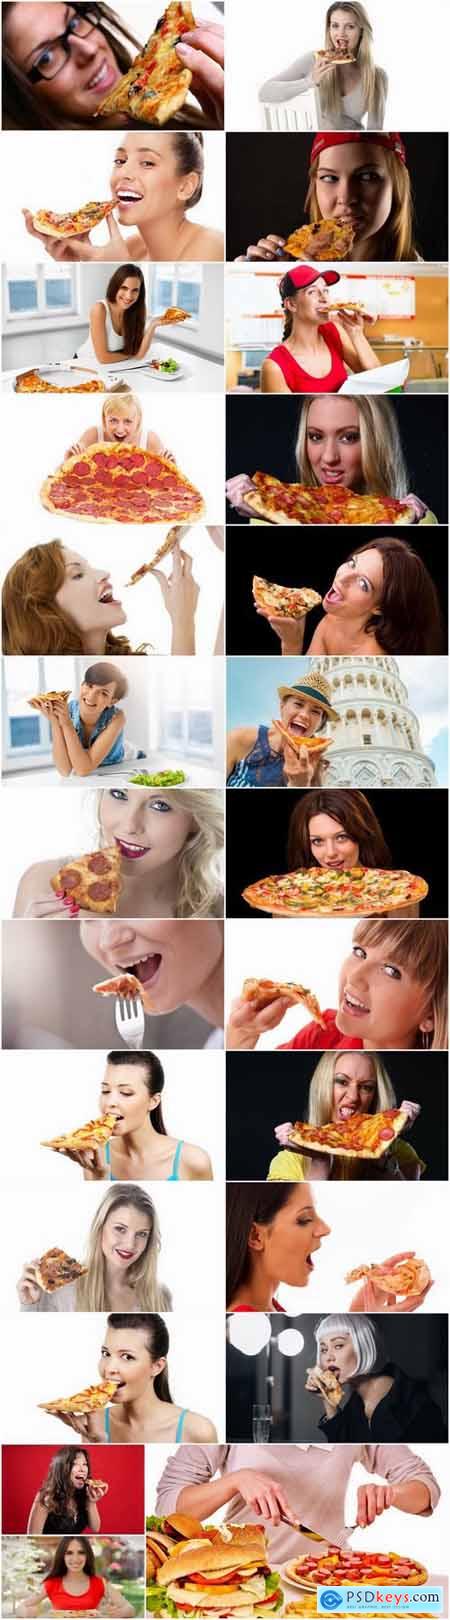 Woman girl eating pizza 25 HQ Jpeg